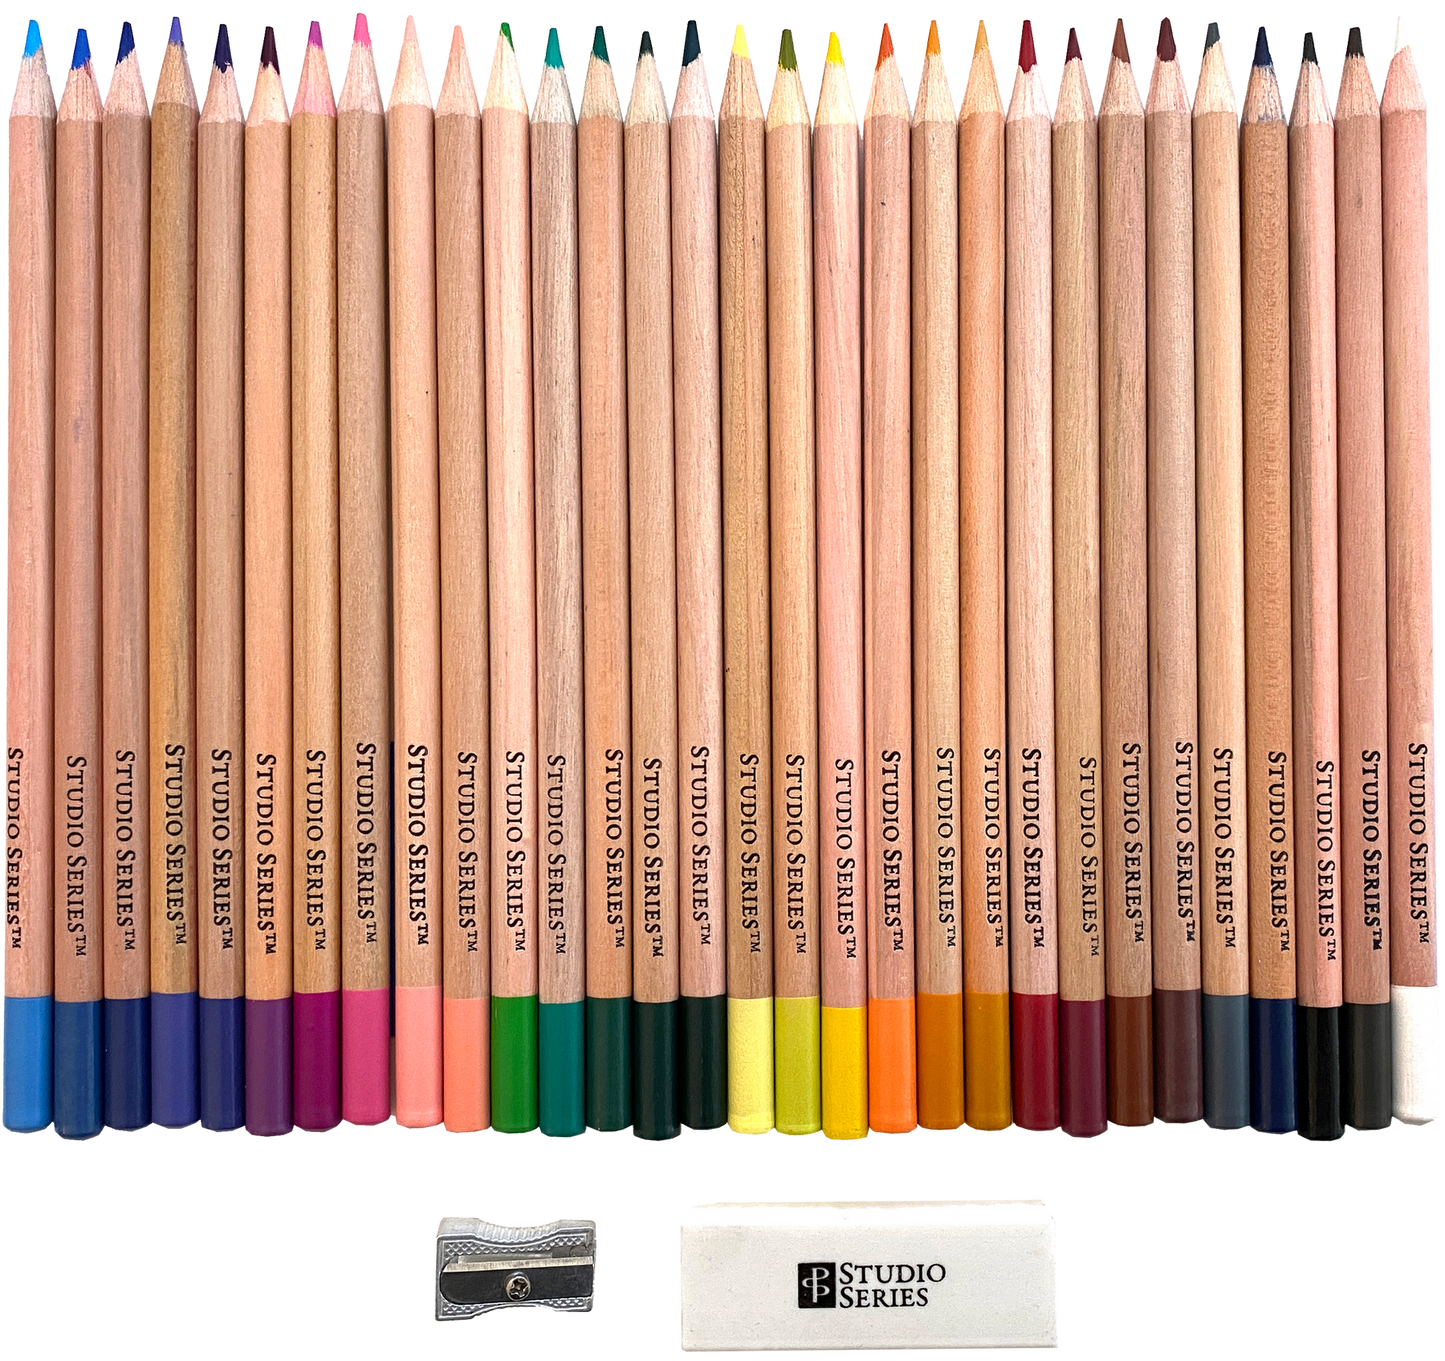 Studio Series Set of 30 Coloured Pencils